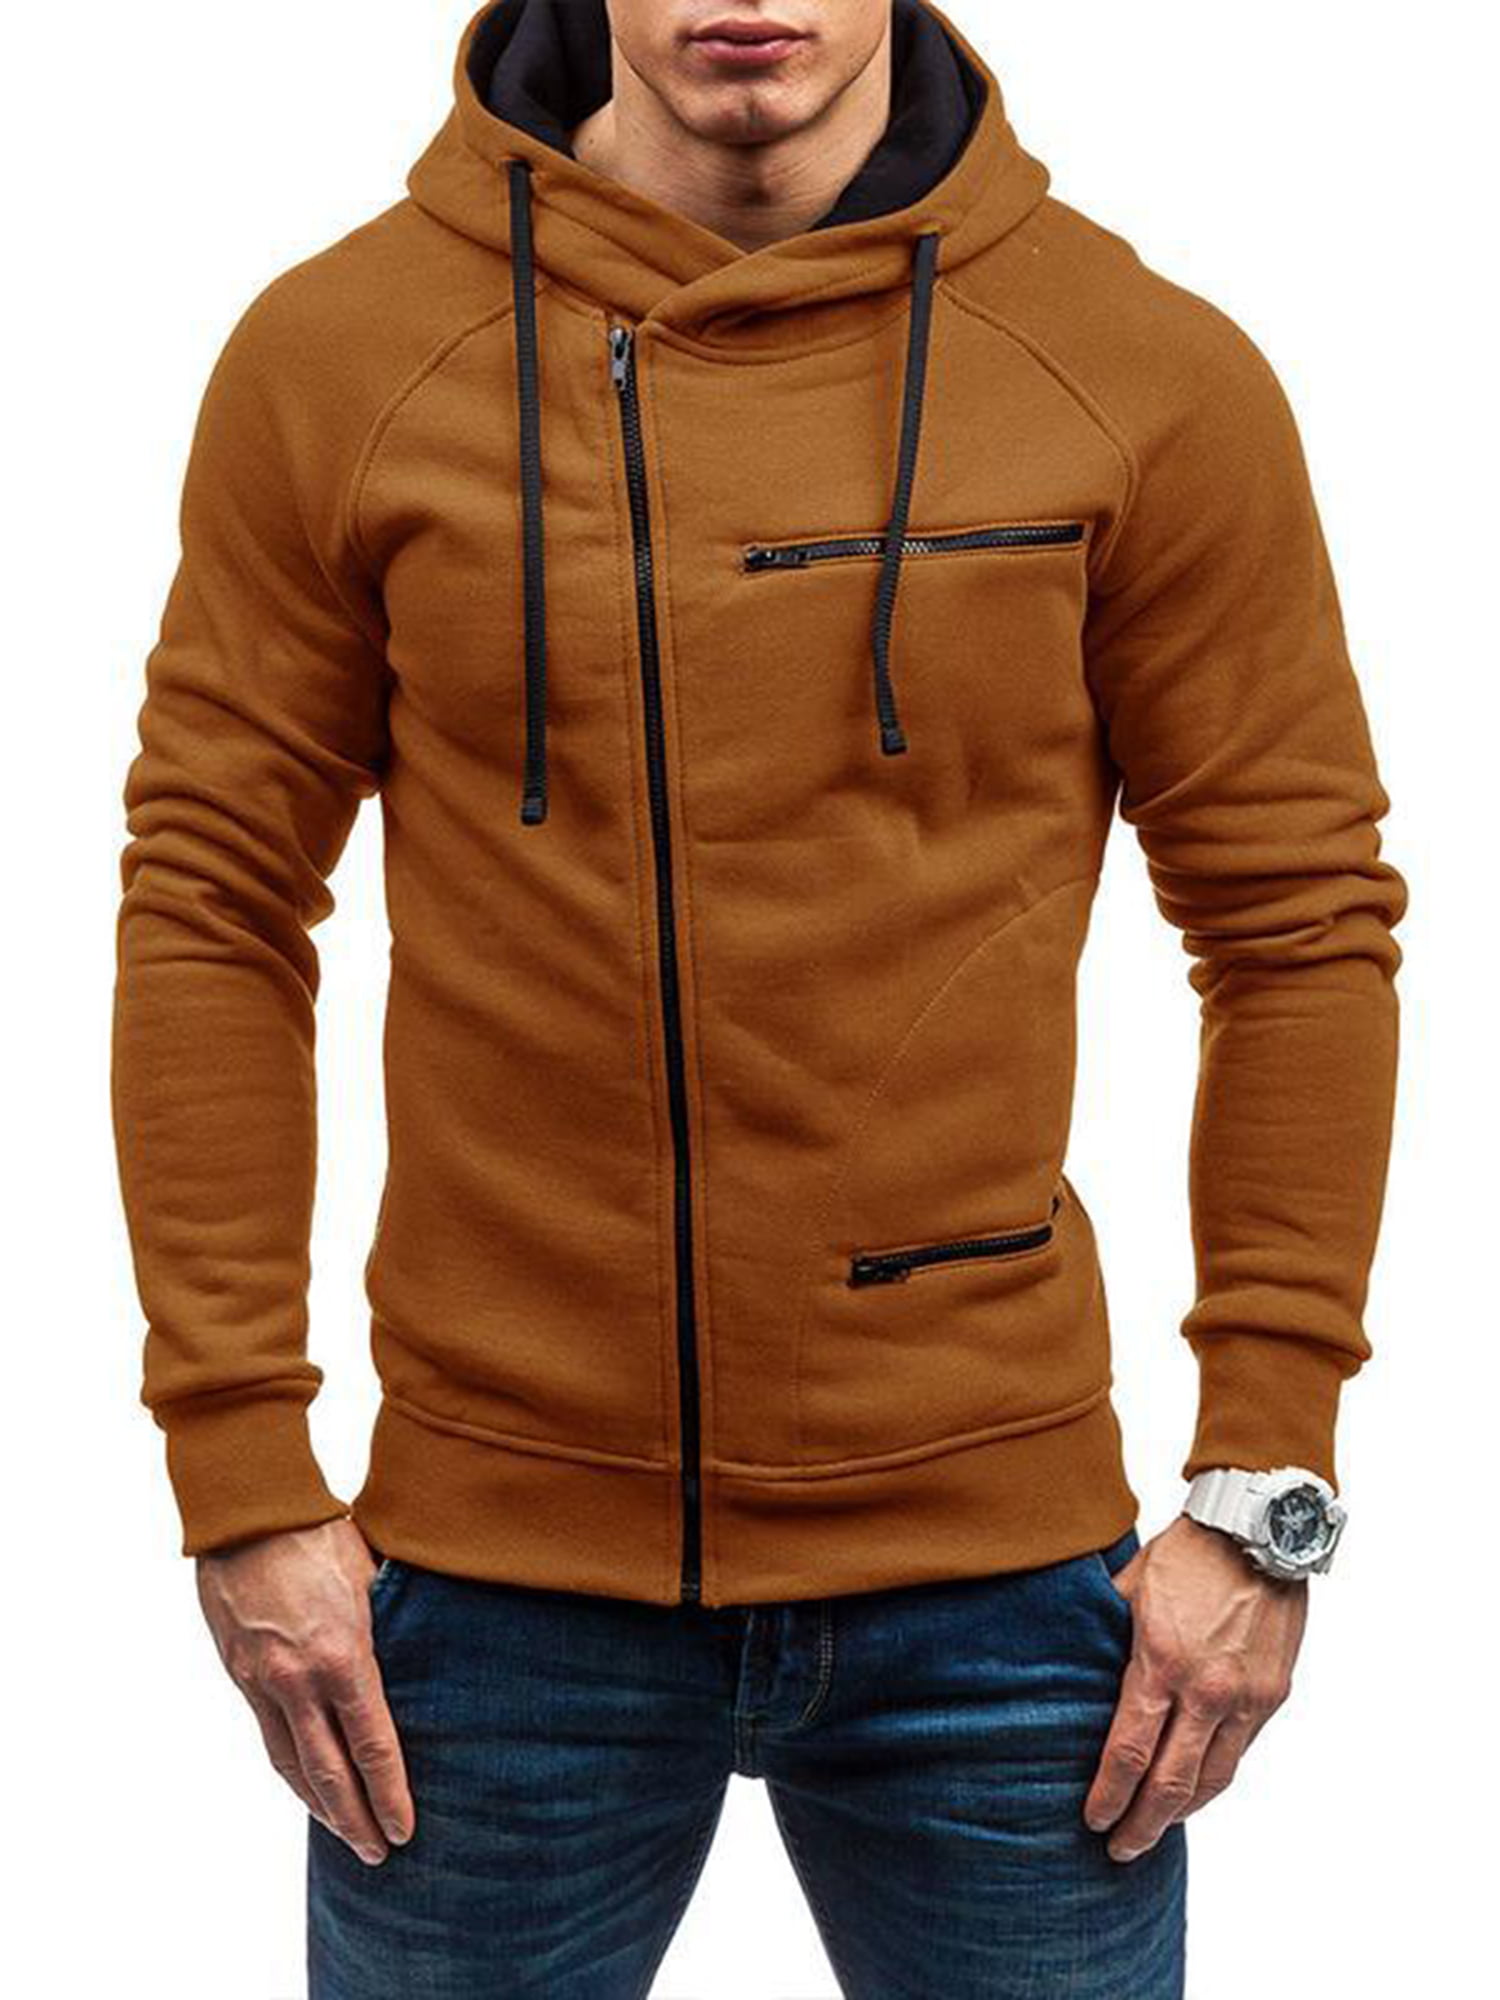 Mens Hoodies Pullover Hooded Sweatshirt Top Plain Jacket Warm Coat Jumper Tops 